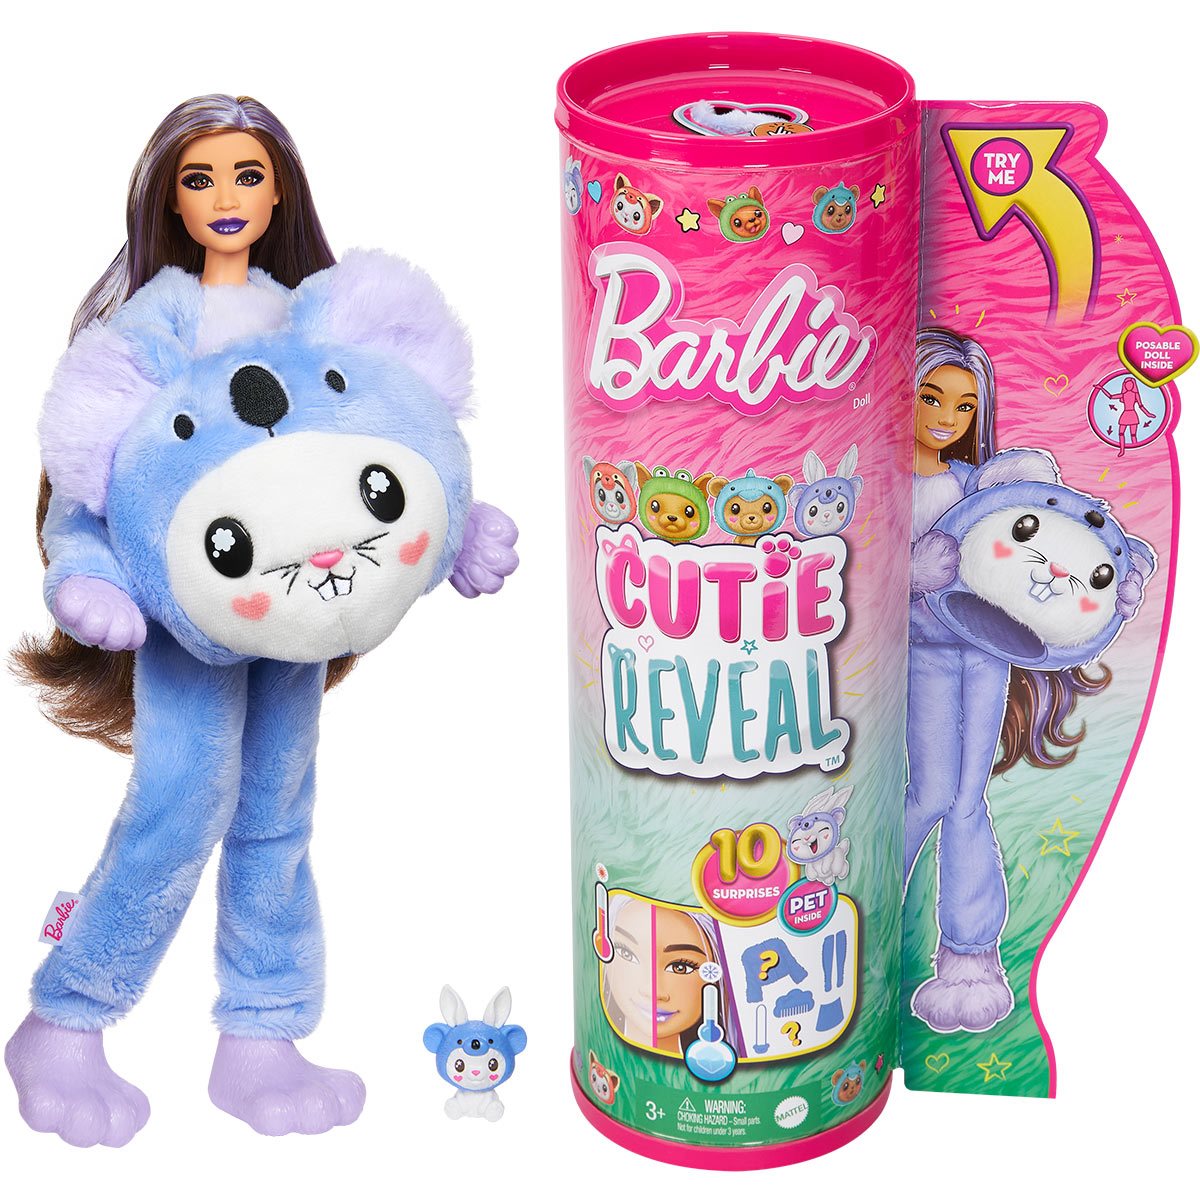 Barbie Cutie Reveal Bunny as Koala Doll - Entertainment Earth